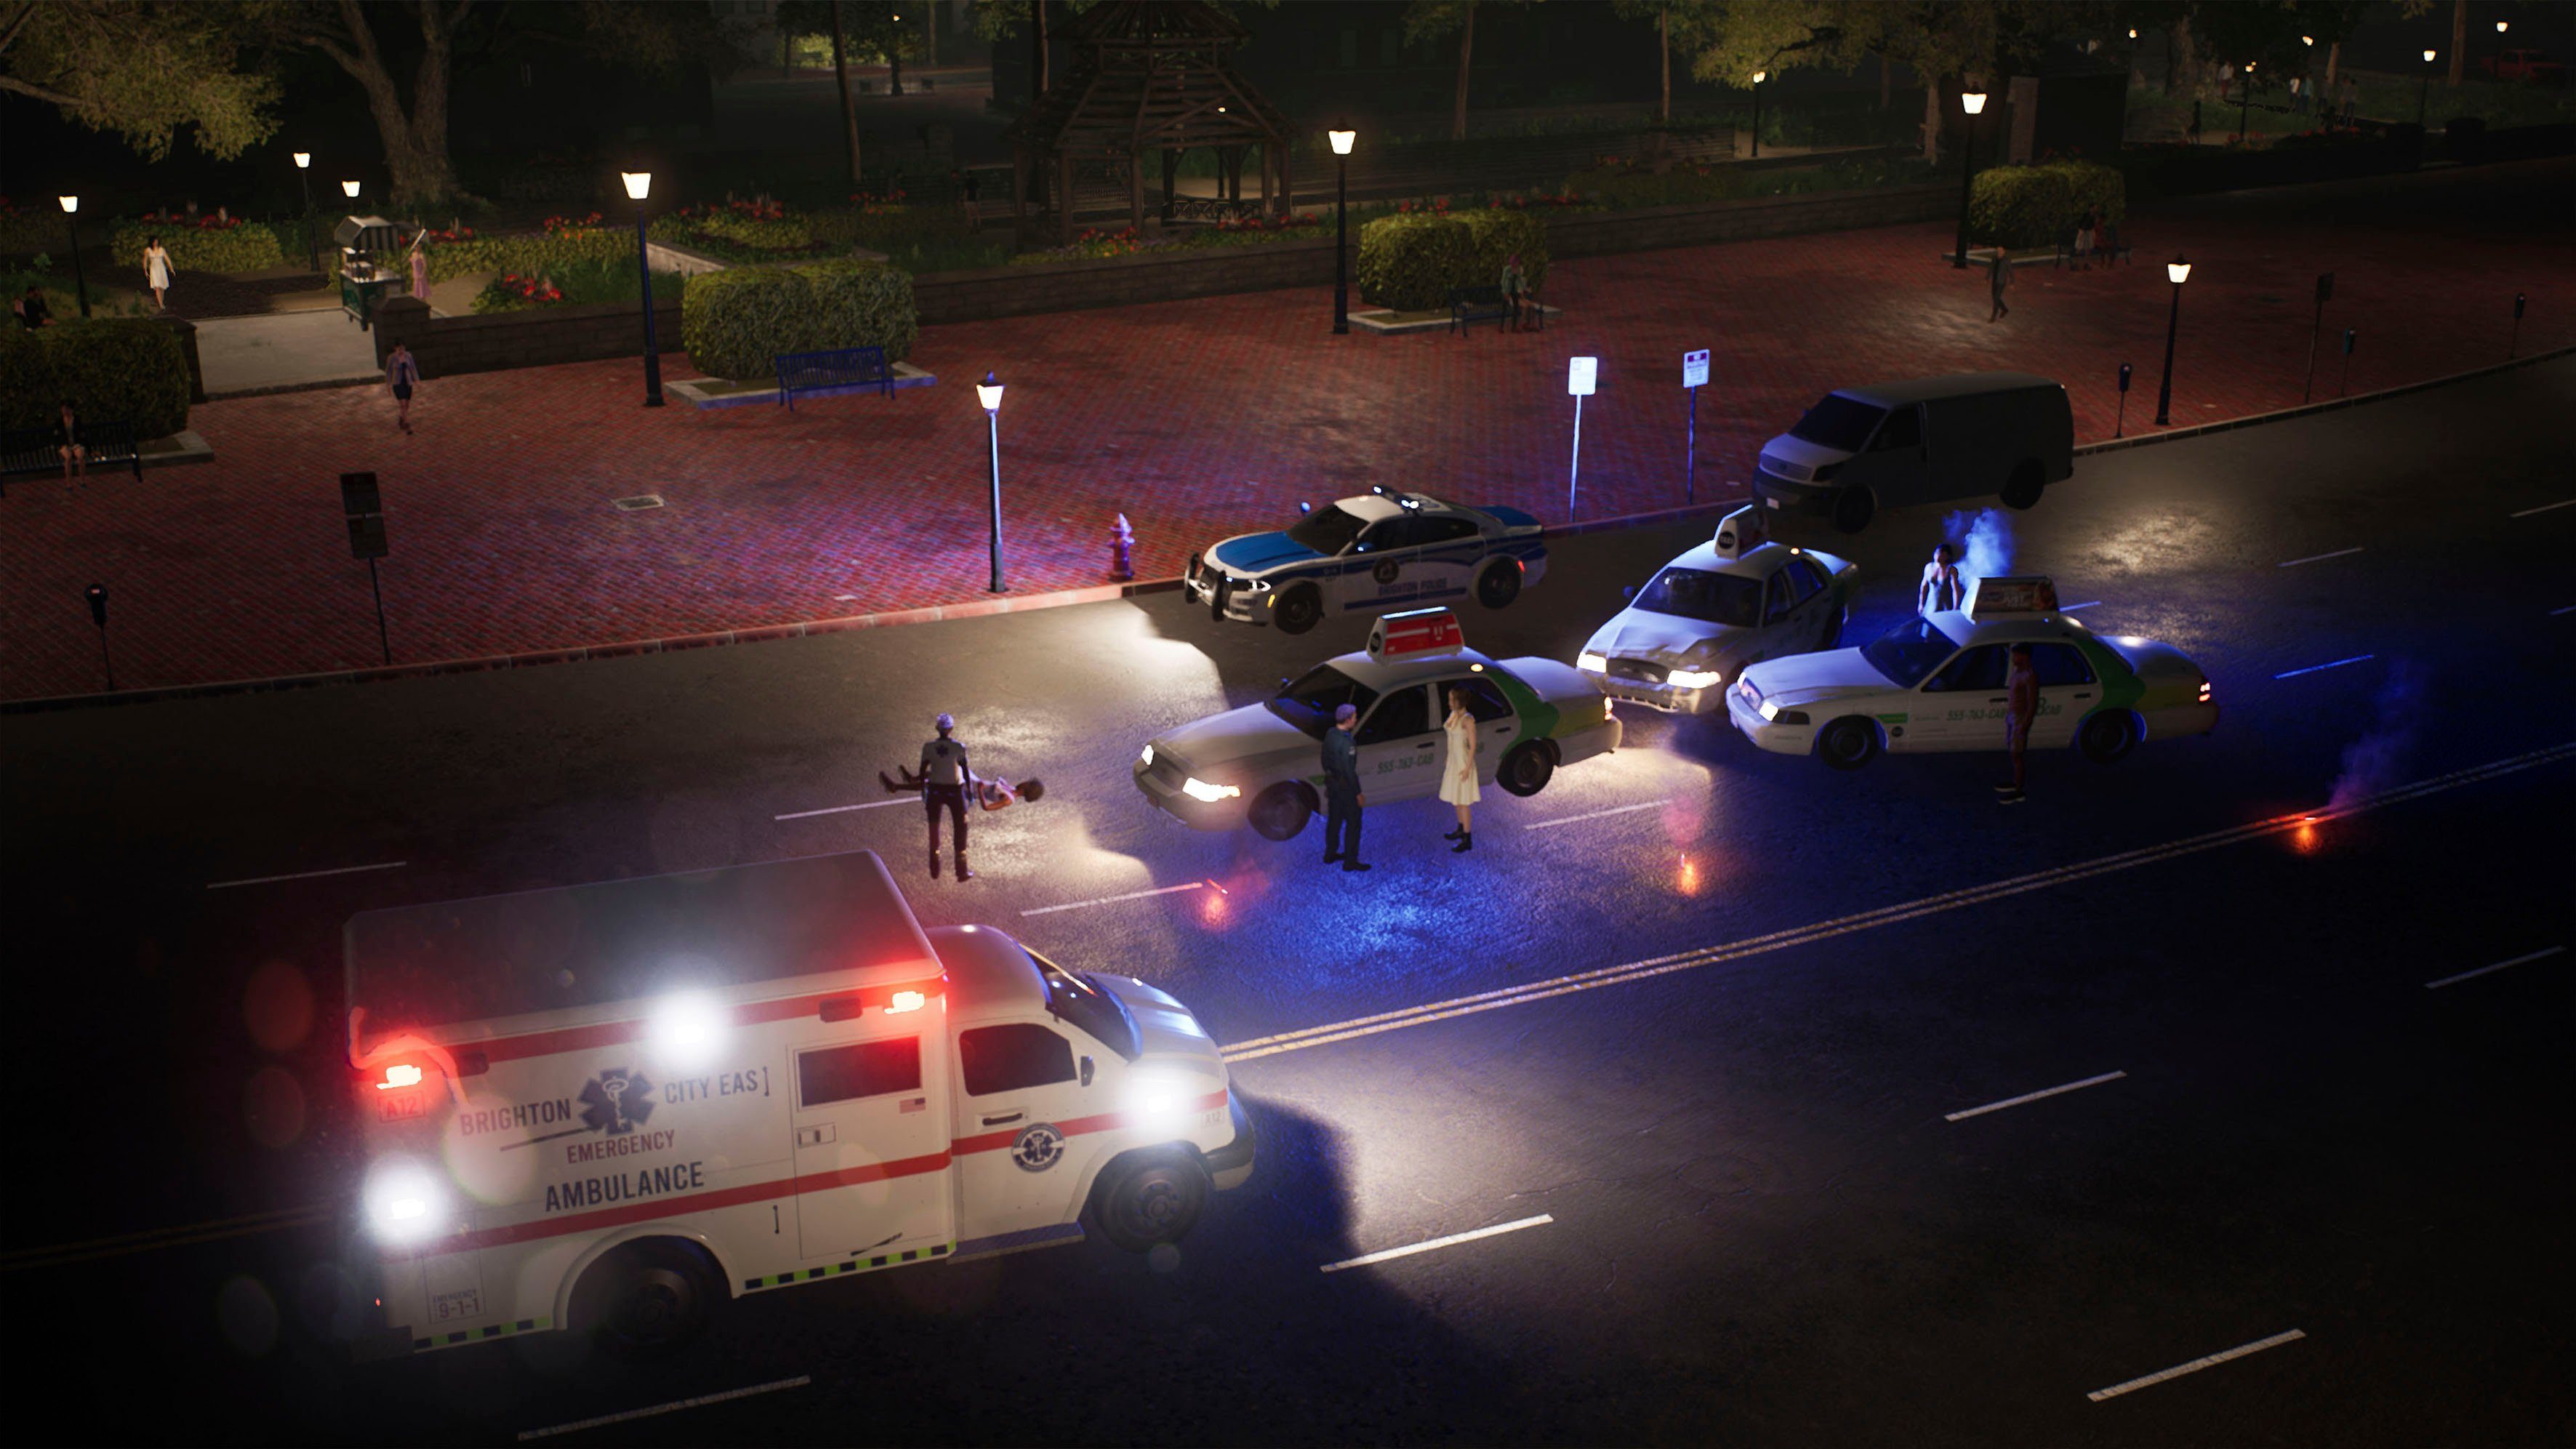 Patrol PlayStation 4 Astragon Police Officers Simulator: